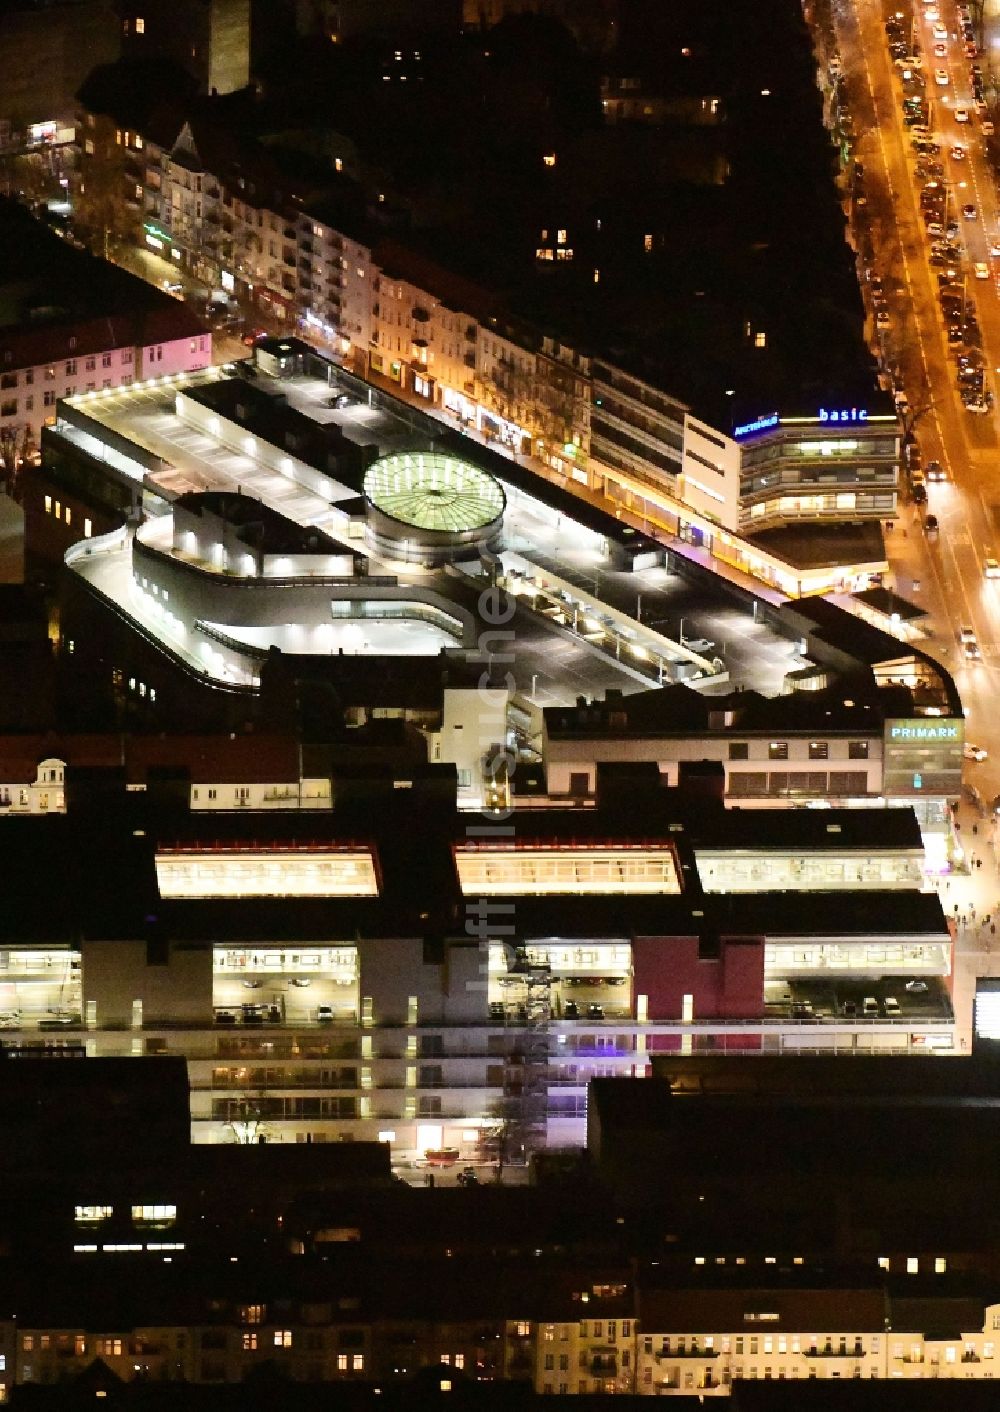 Nachtluftbild Berlin - Nachtluftbild Einkaufszentrum Boulevard Berlin Steglitz